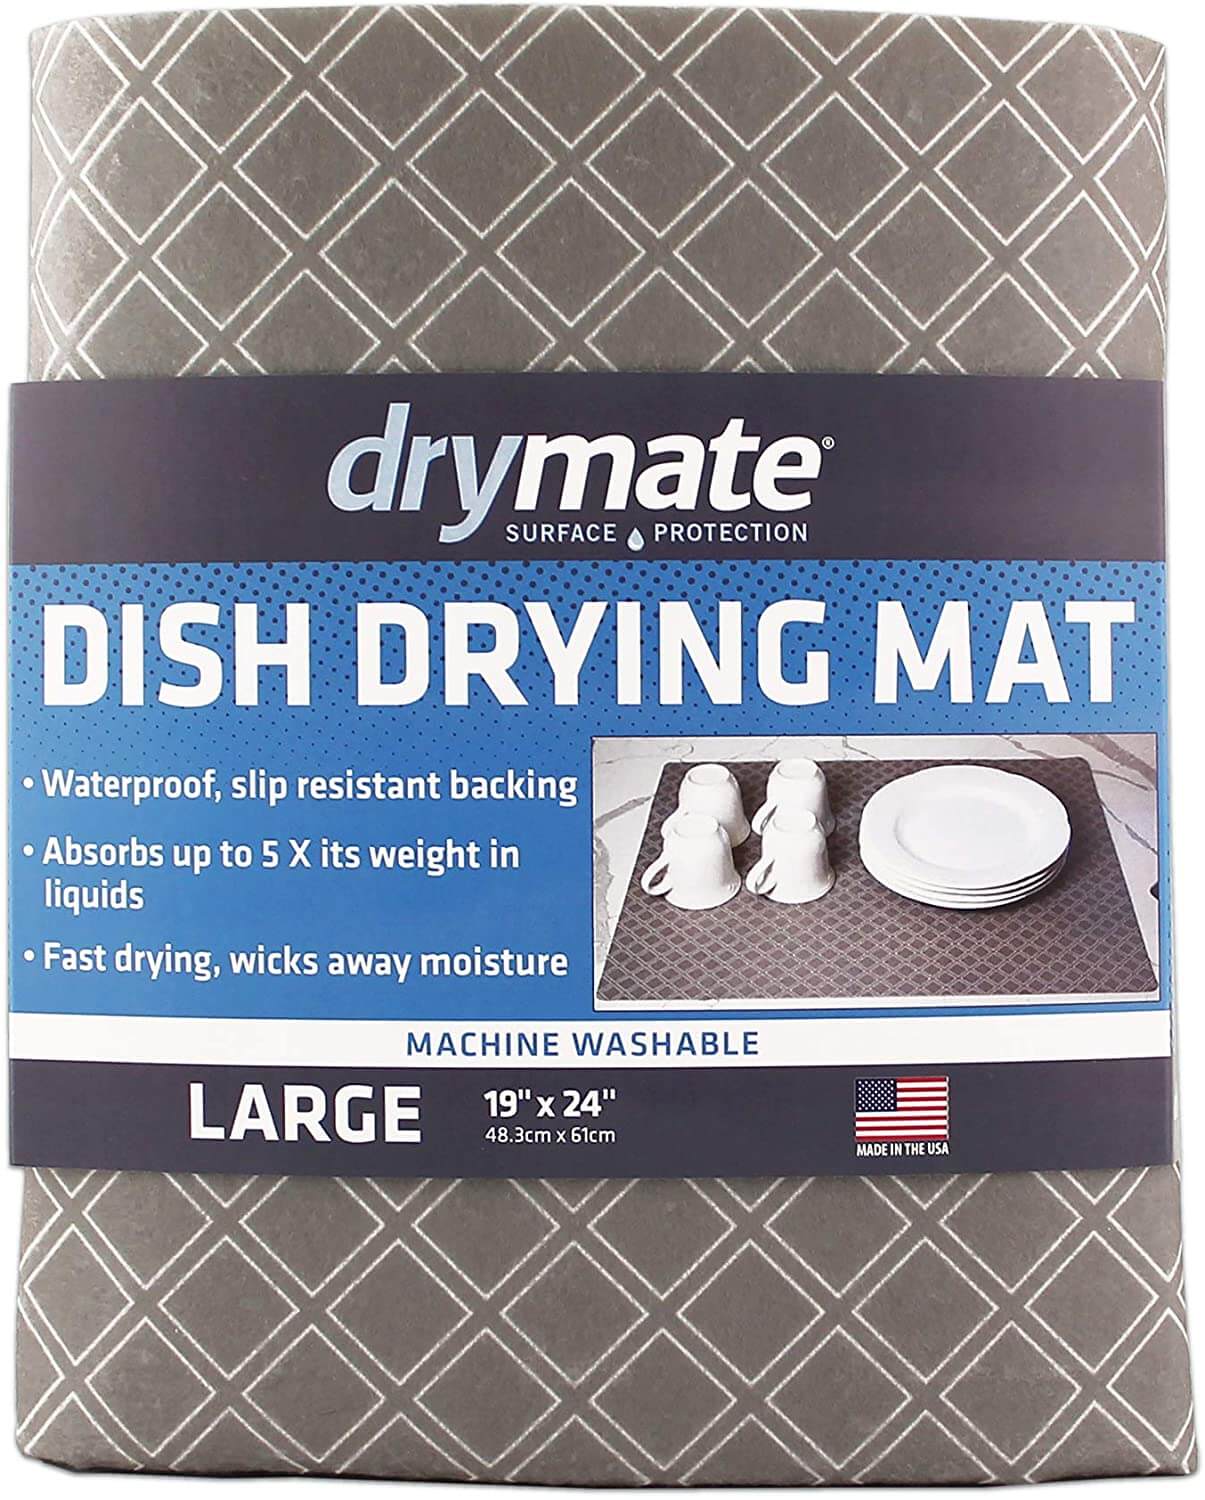 https://www.foodsharkmarfa.com/wp-content/uploads/2020/11/Drymate-Dish-Drying-Mat.jpg